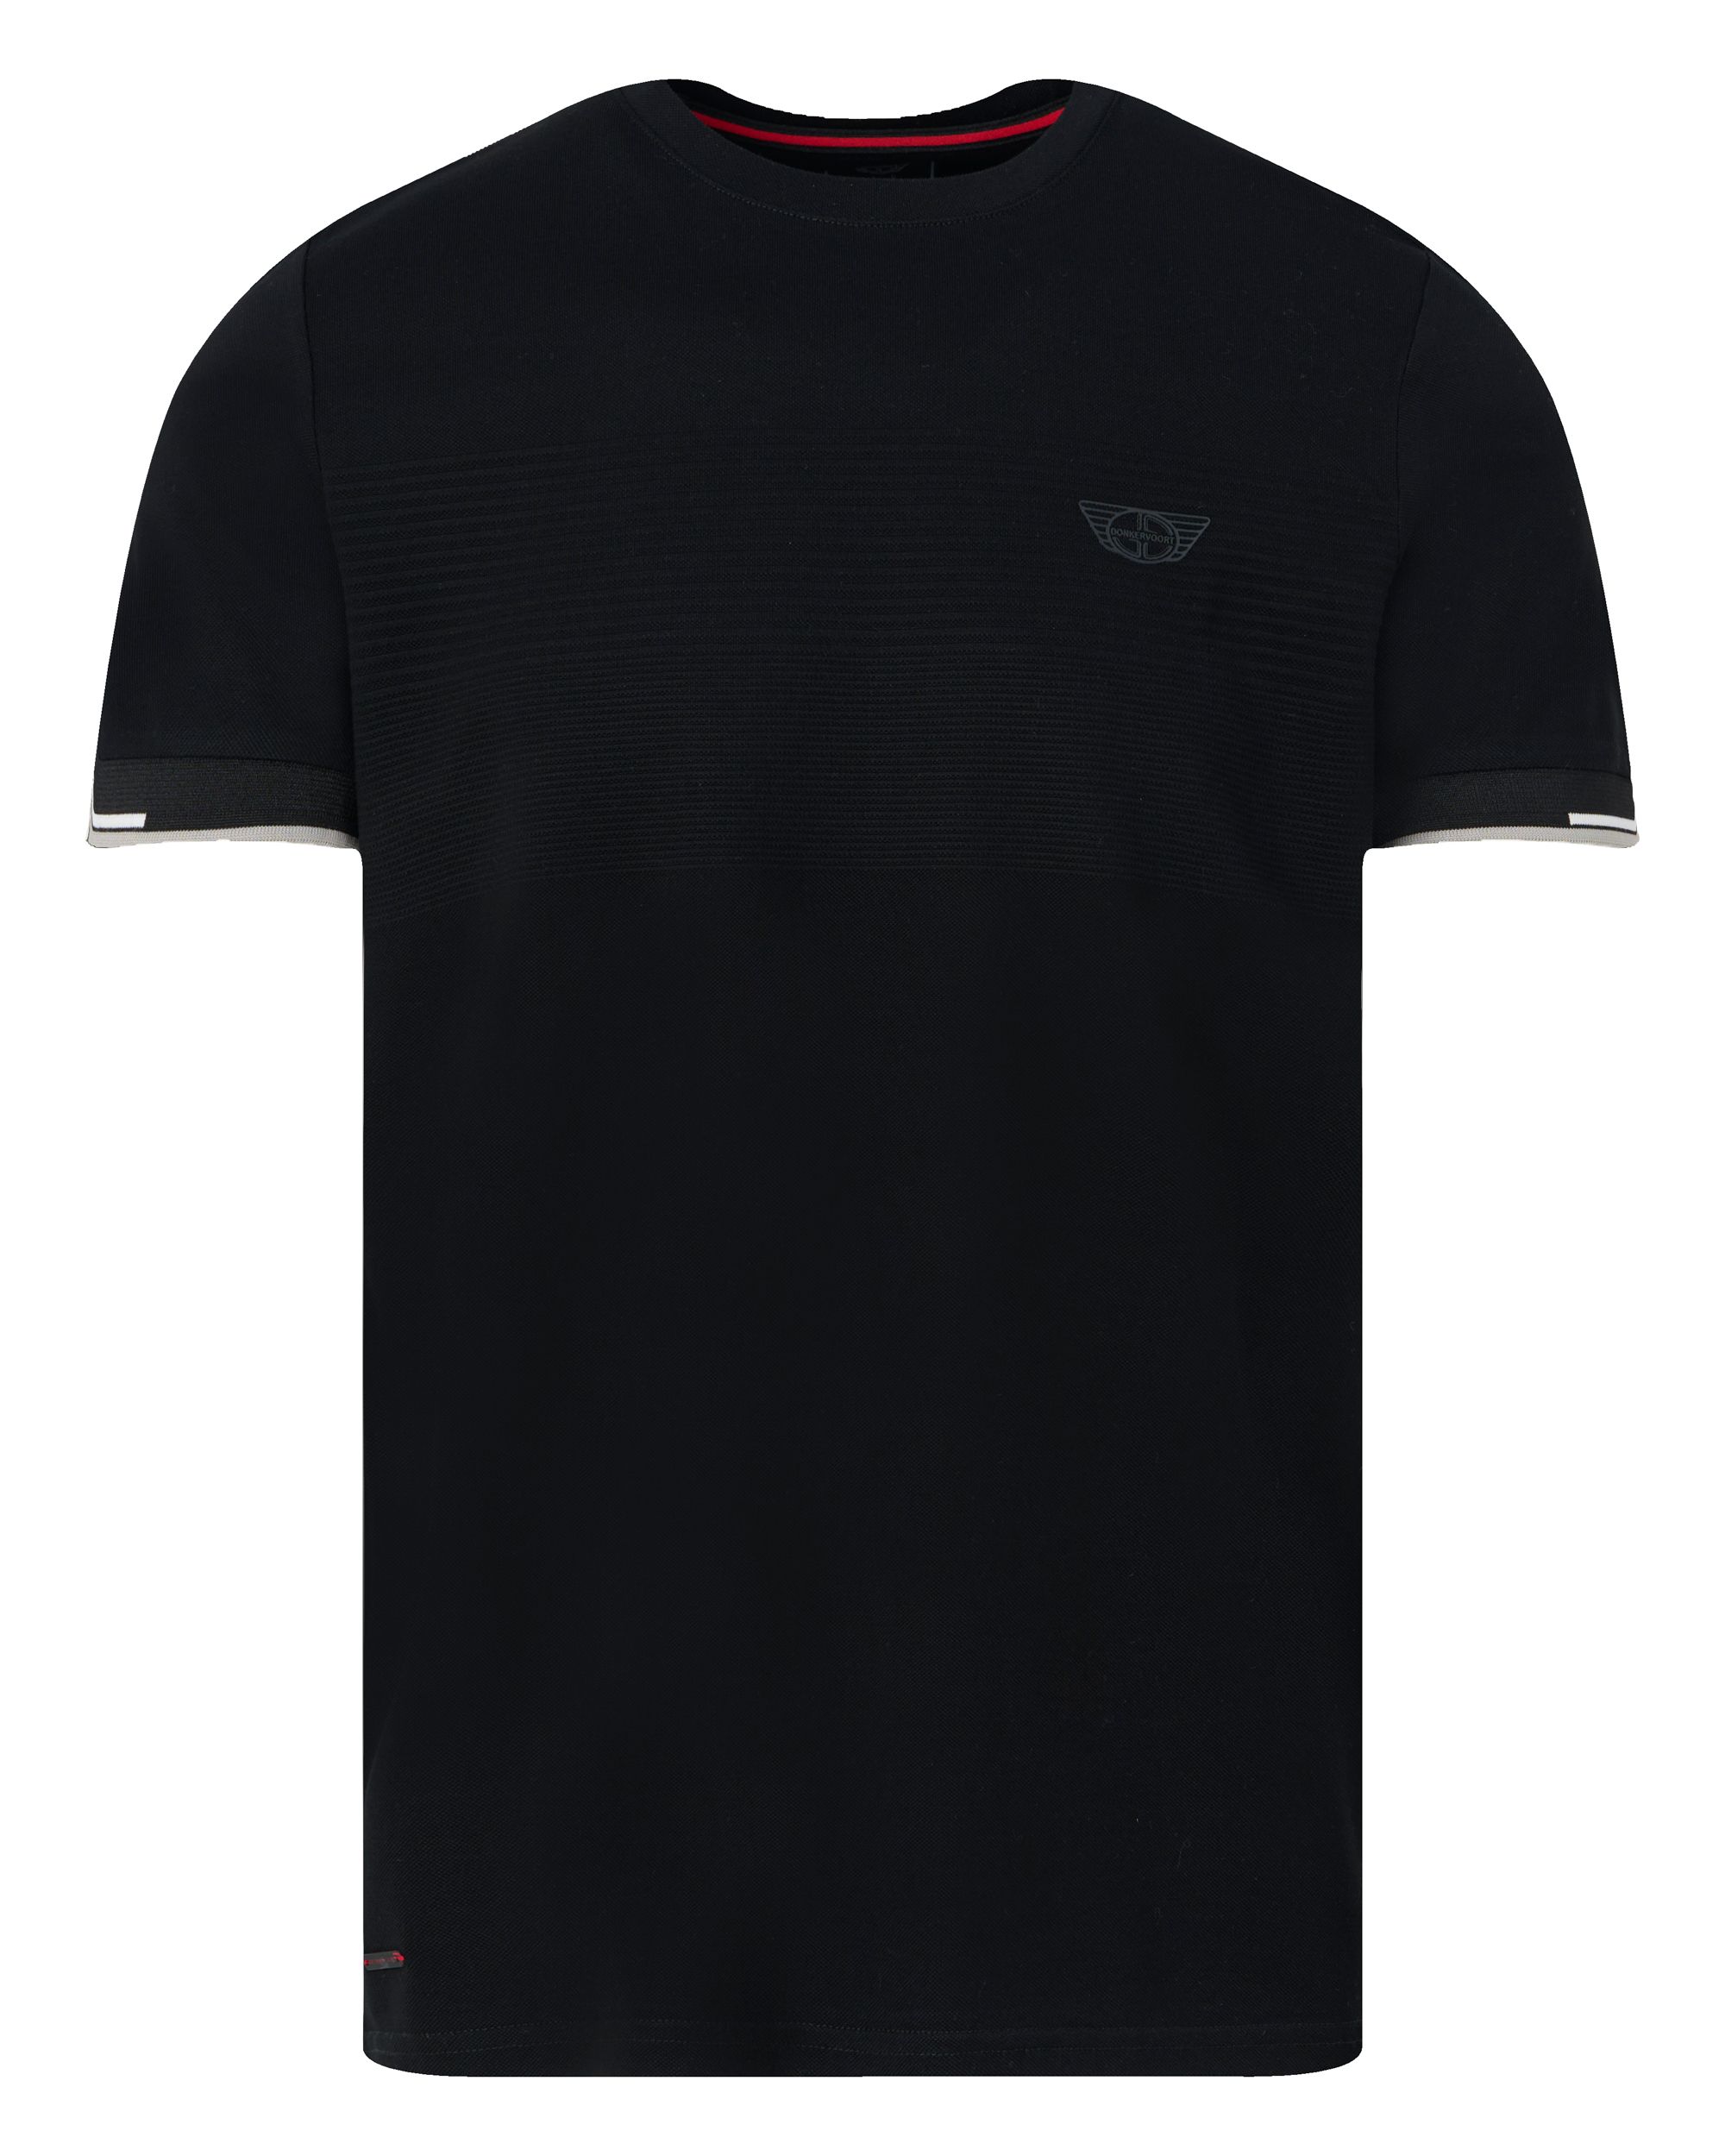 Donkervoort T-shirt KM Black 092470-001-L